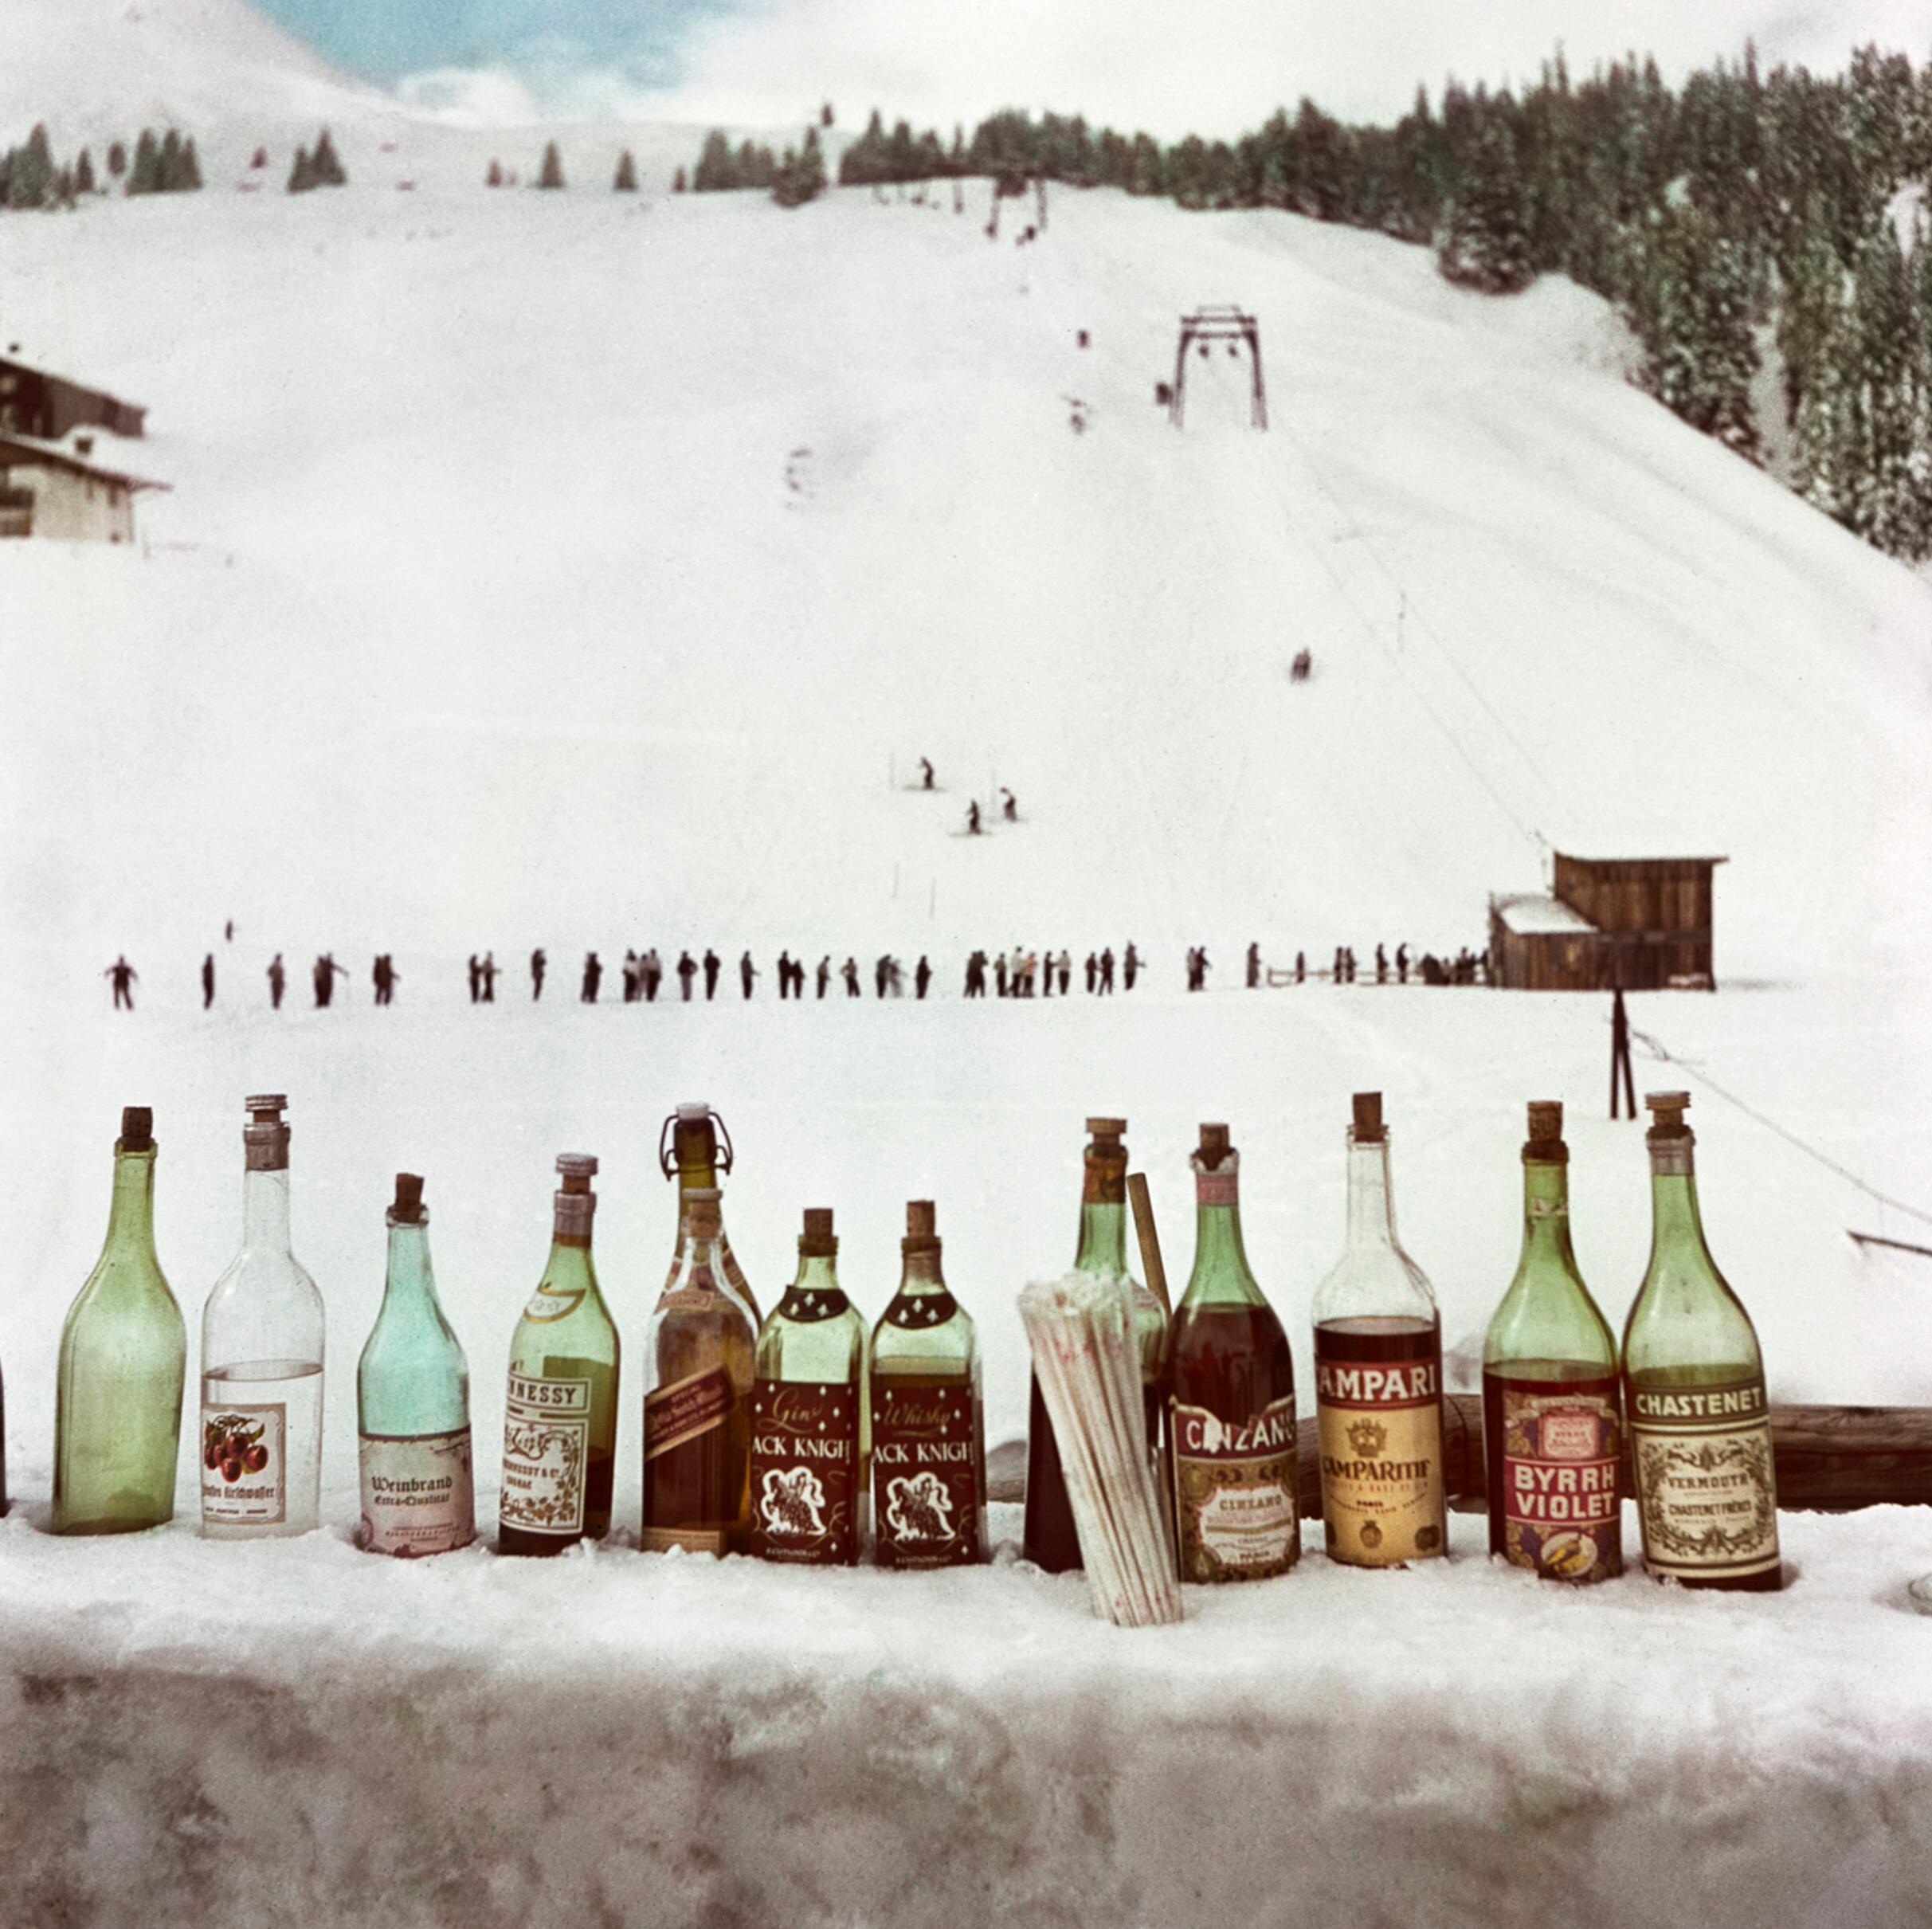 Ледяной бар, Цюрс, Австрия, 1949 год. Фотограф Роберт Капа